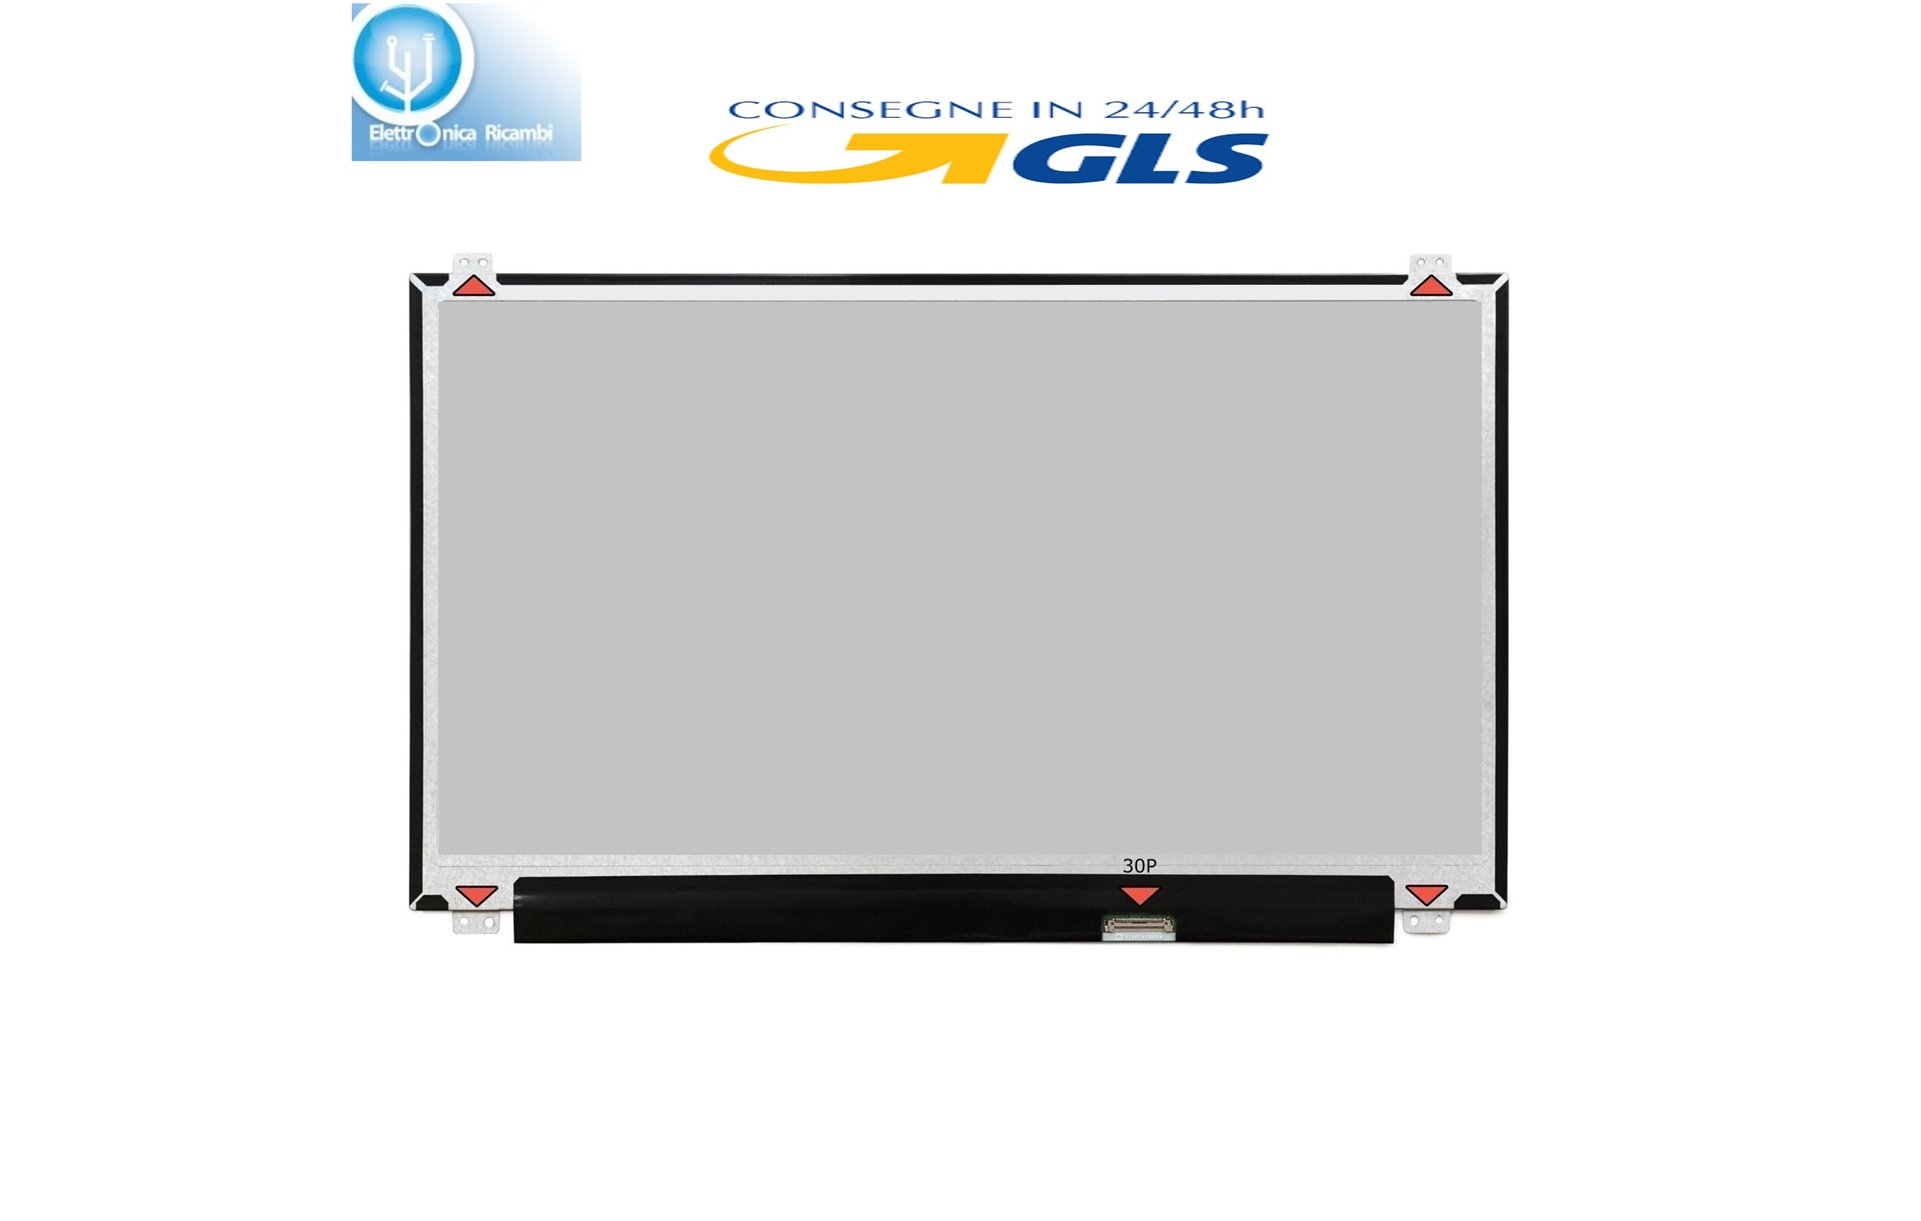  DISPLAY LCD  Lenovo IDEAPAD 310-15ISK 
15.6 WideScreen (13.6"x7.6") LED